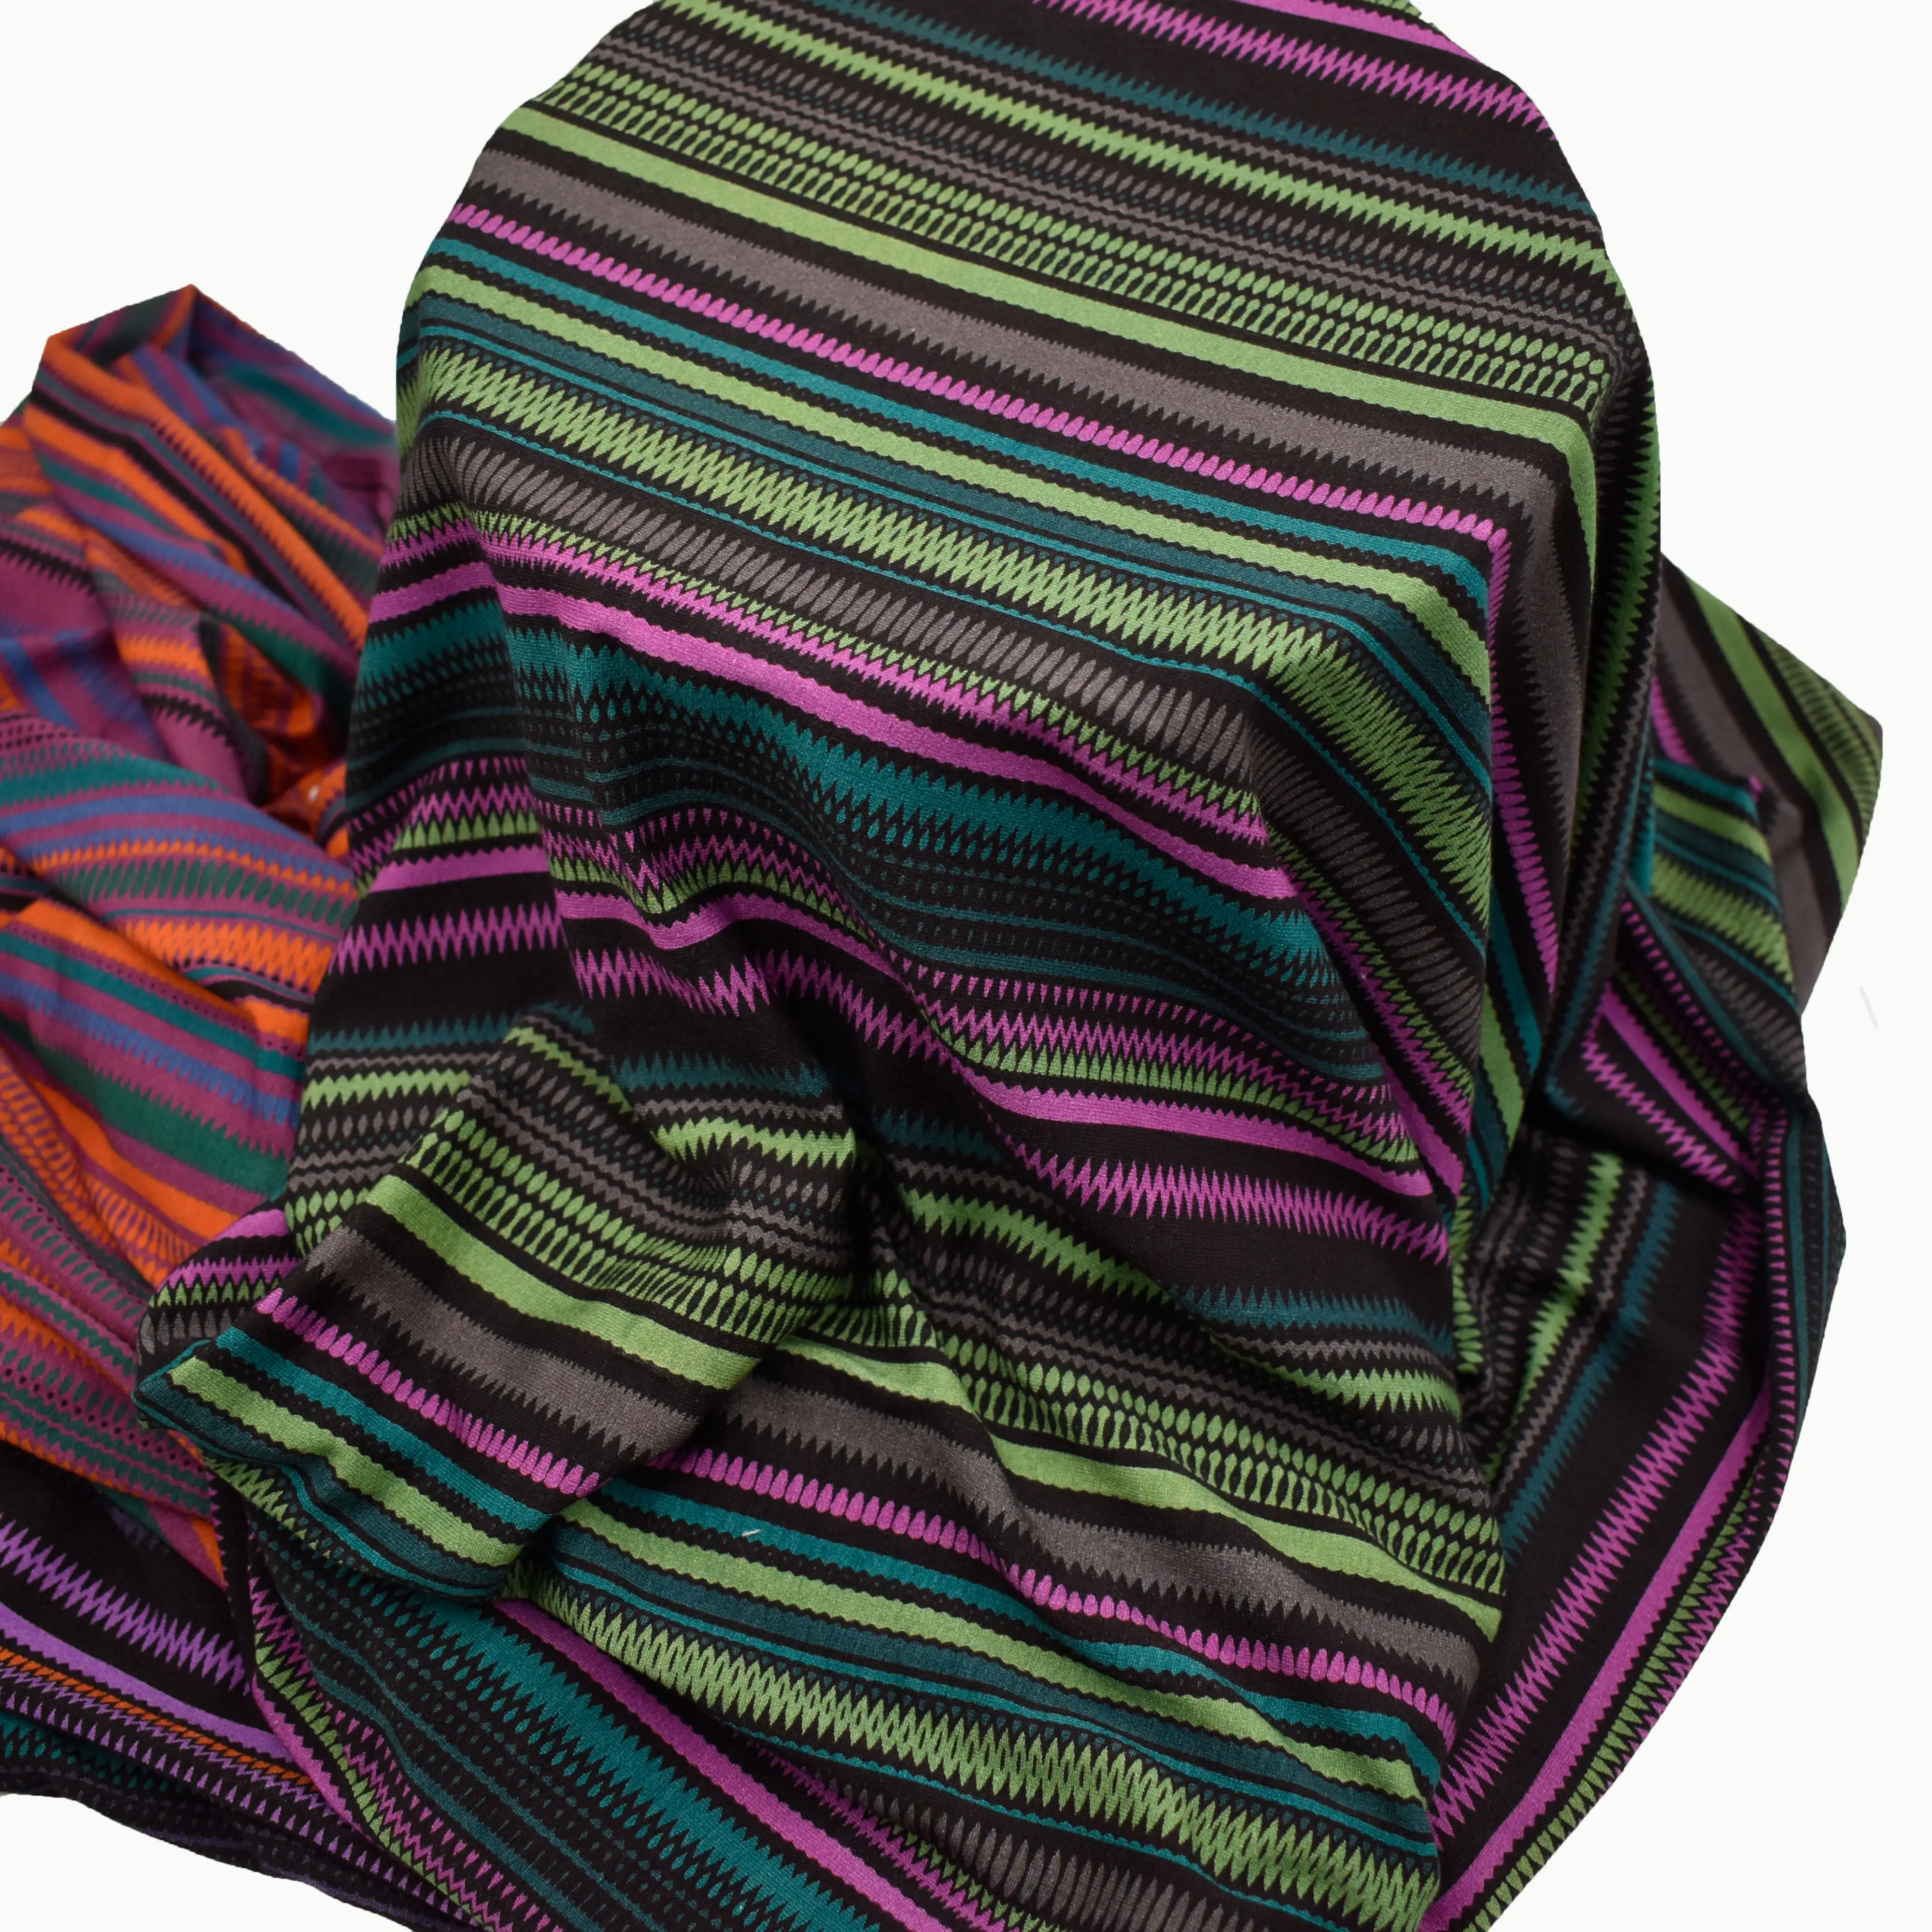 Tekstil profesional 95% Rayon 5% spandeks kain rajut garis kain pakaian cetak Digital untuk gaun